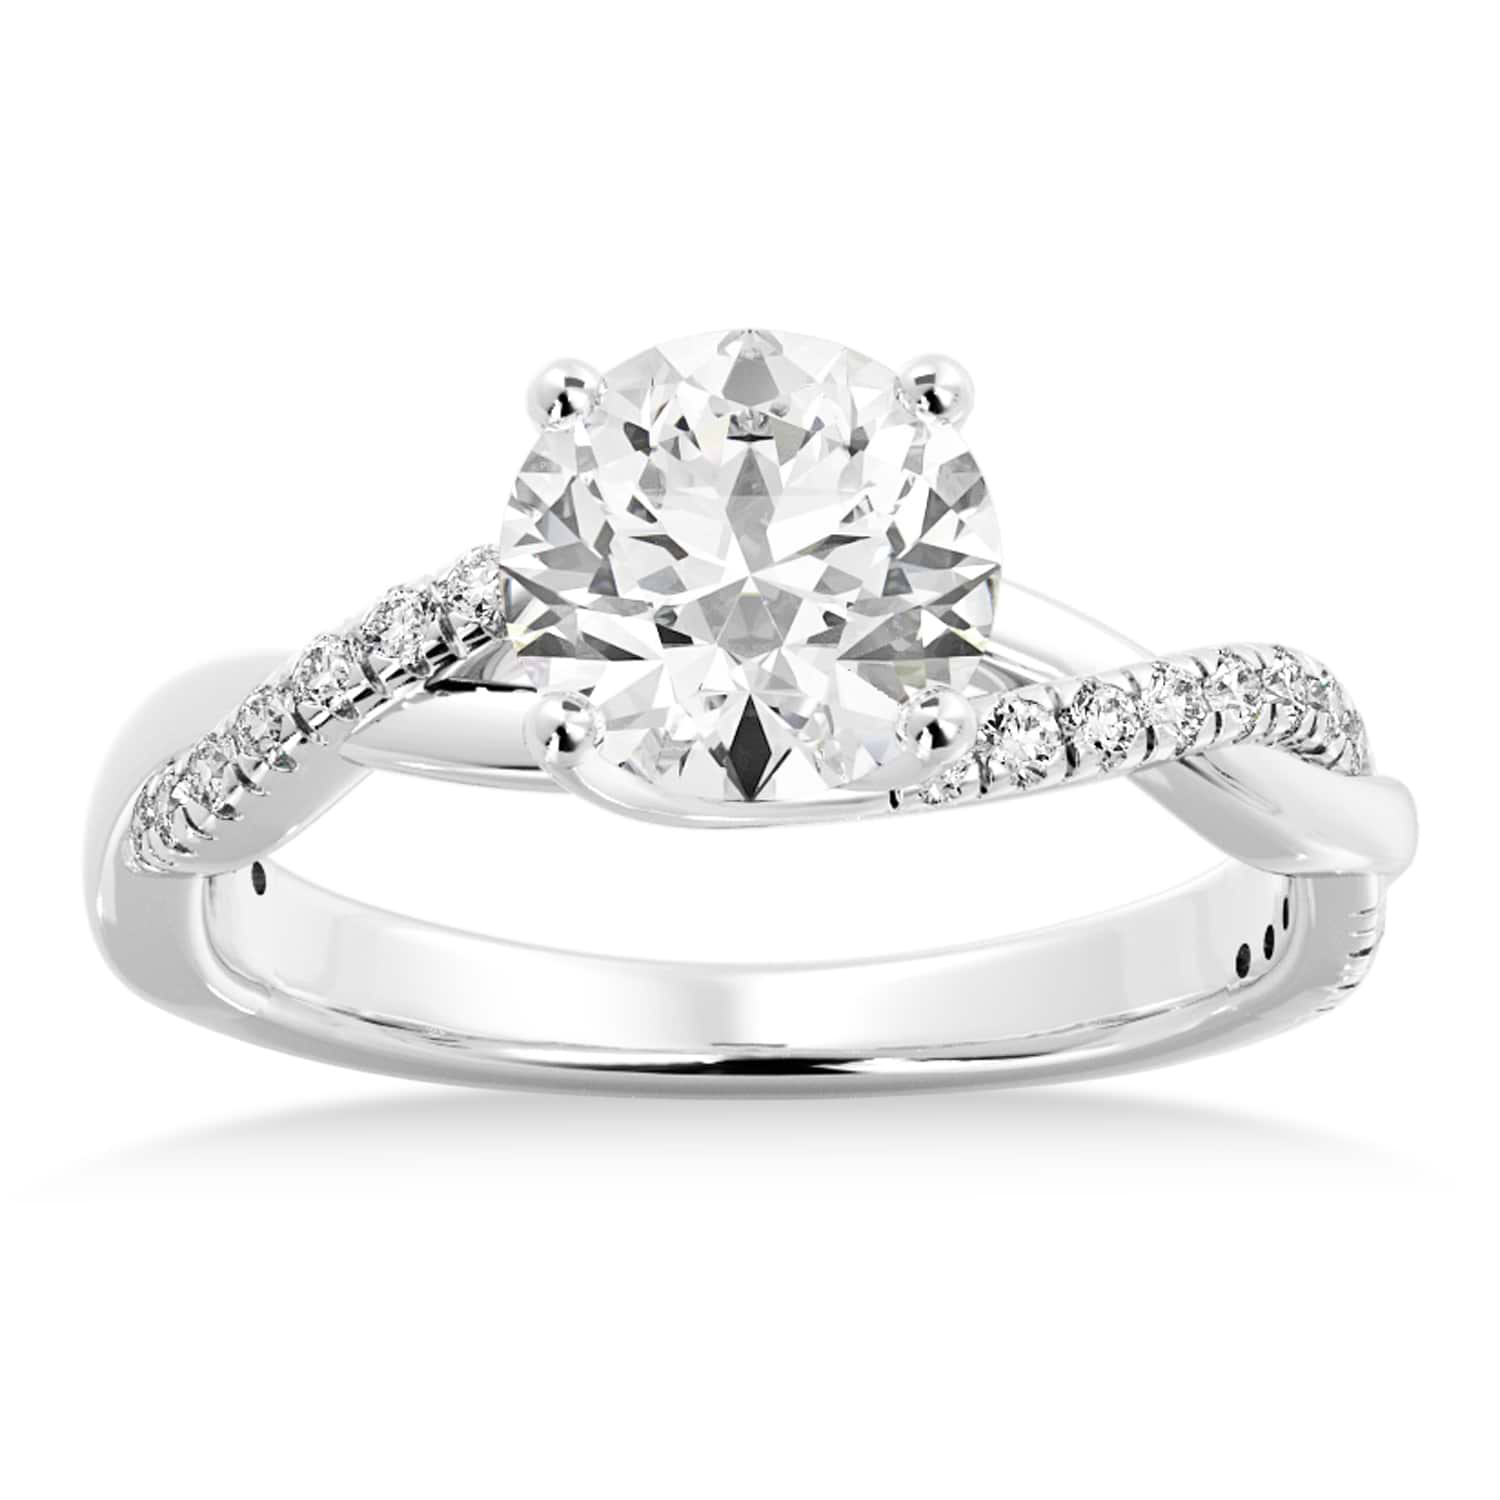 Lab Grown Diamond  Classic Engagement Ring 14k White Gold (0.16ct)